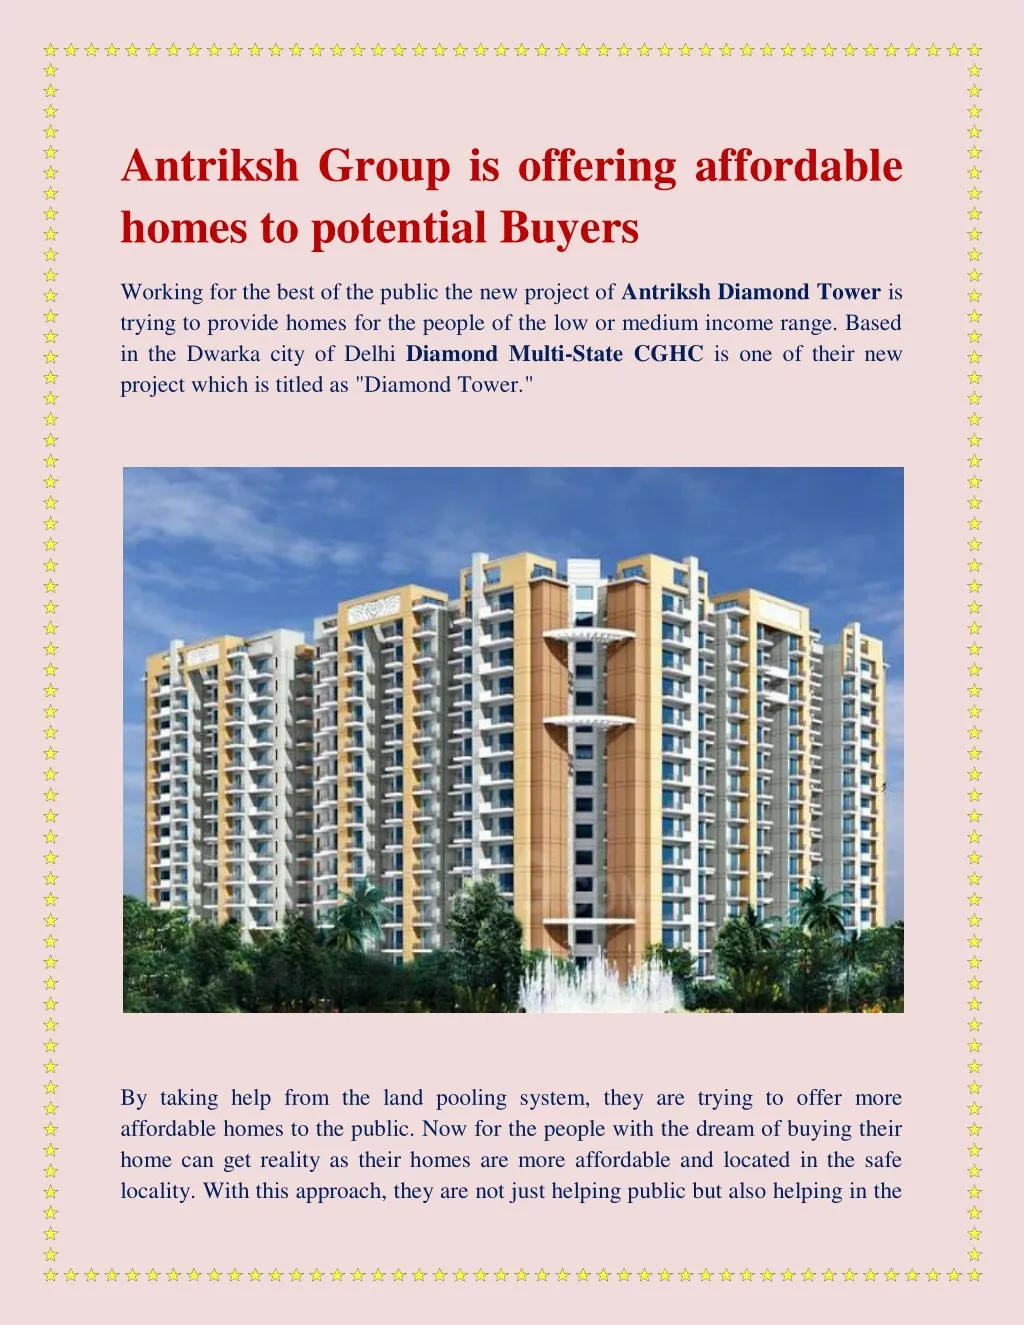 antriksh group is offering affordable homes